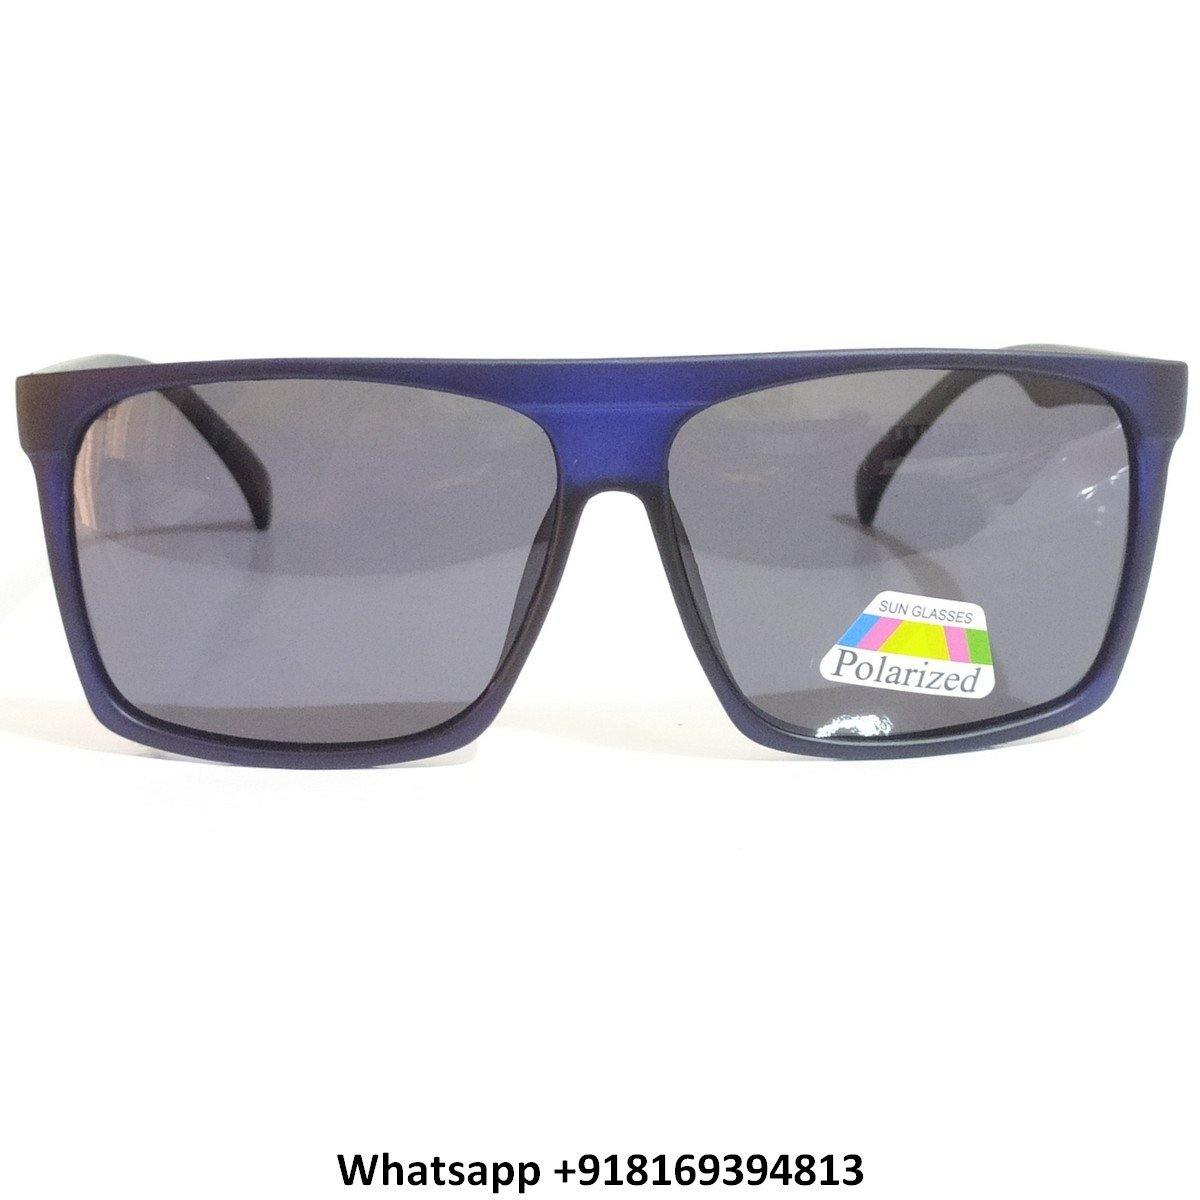 Trendy Square Polarized Sunglasses for Men and Women 2156BL - Glasses India Online